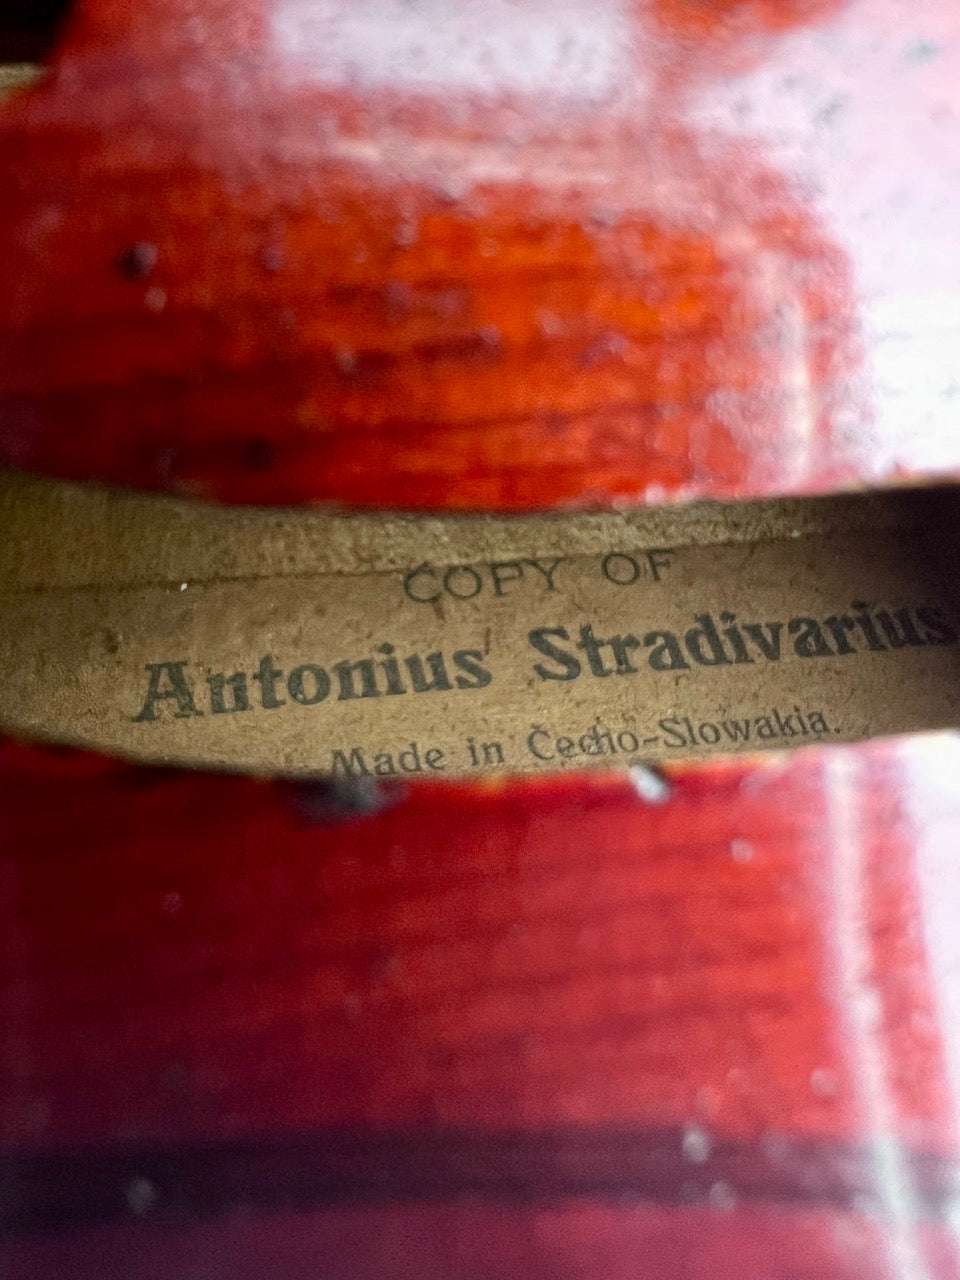 Czech Stradivarius Copy c.1920. Violin